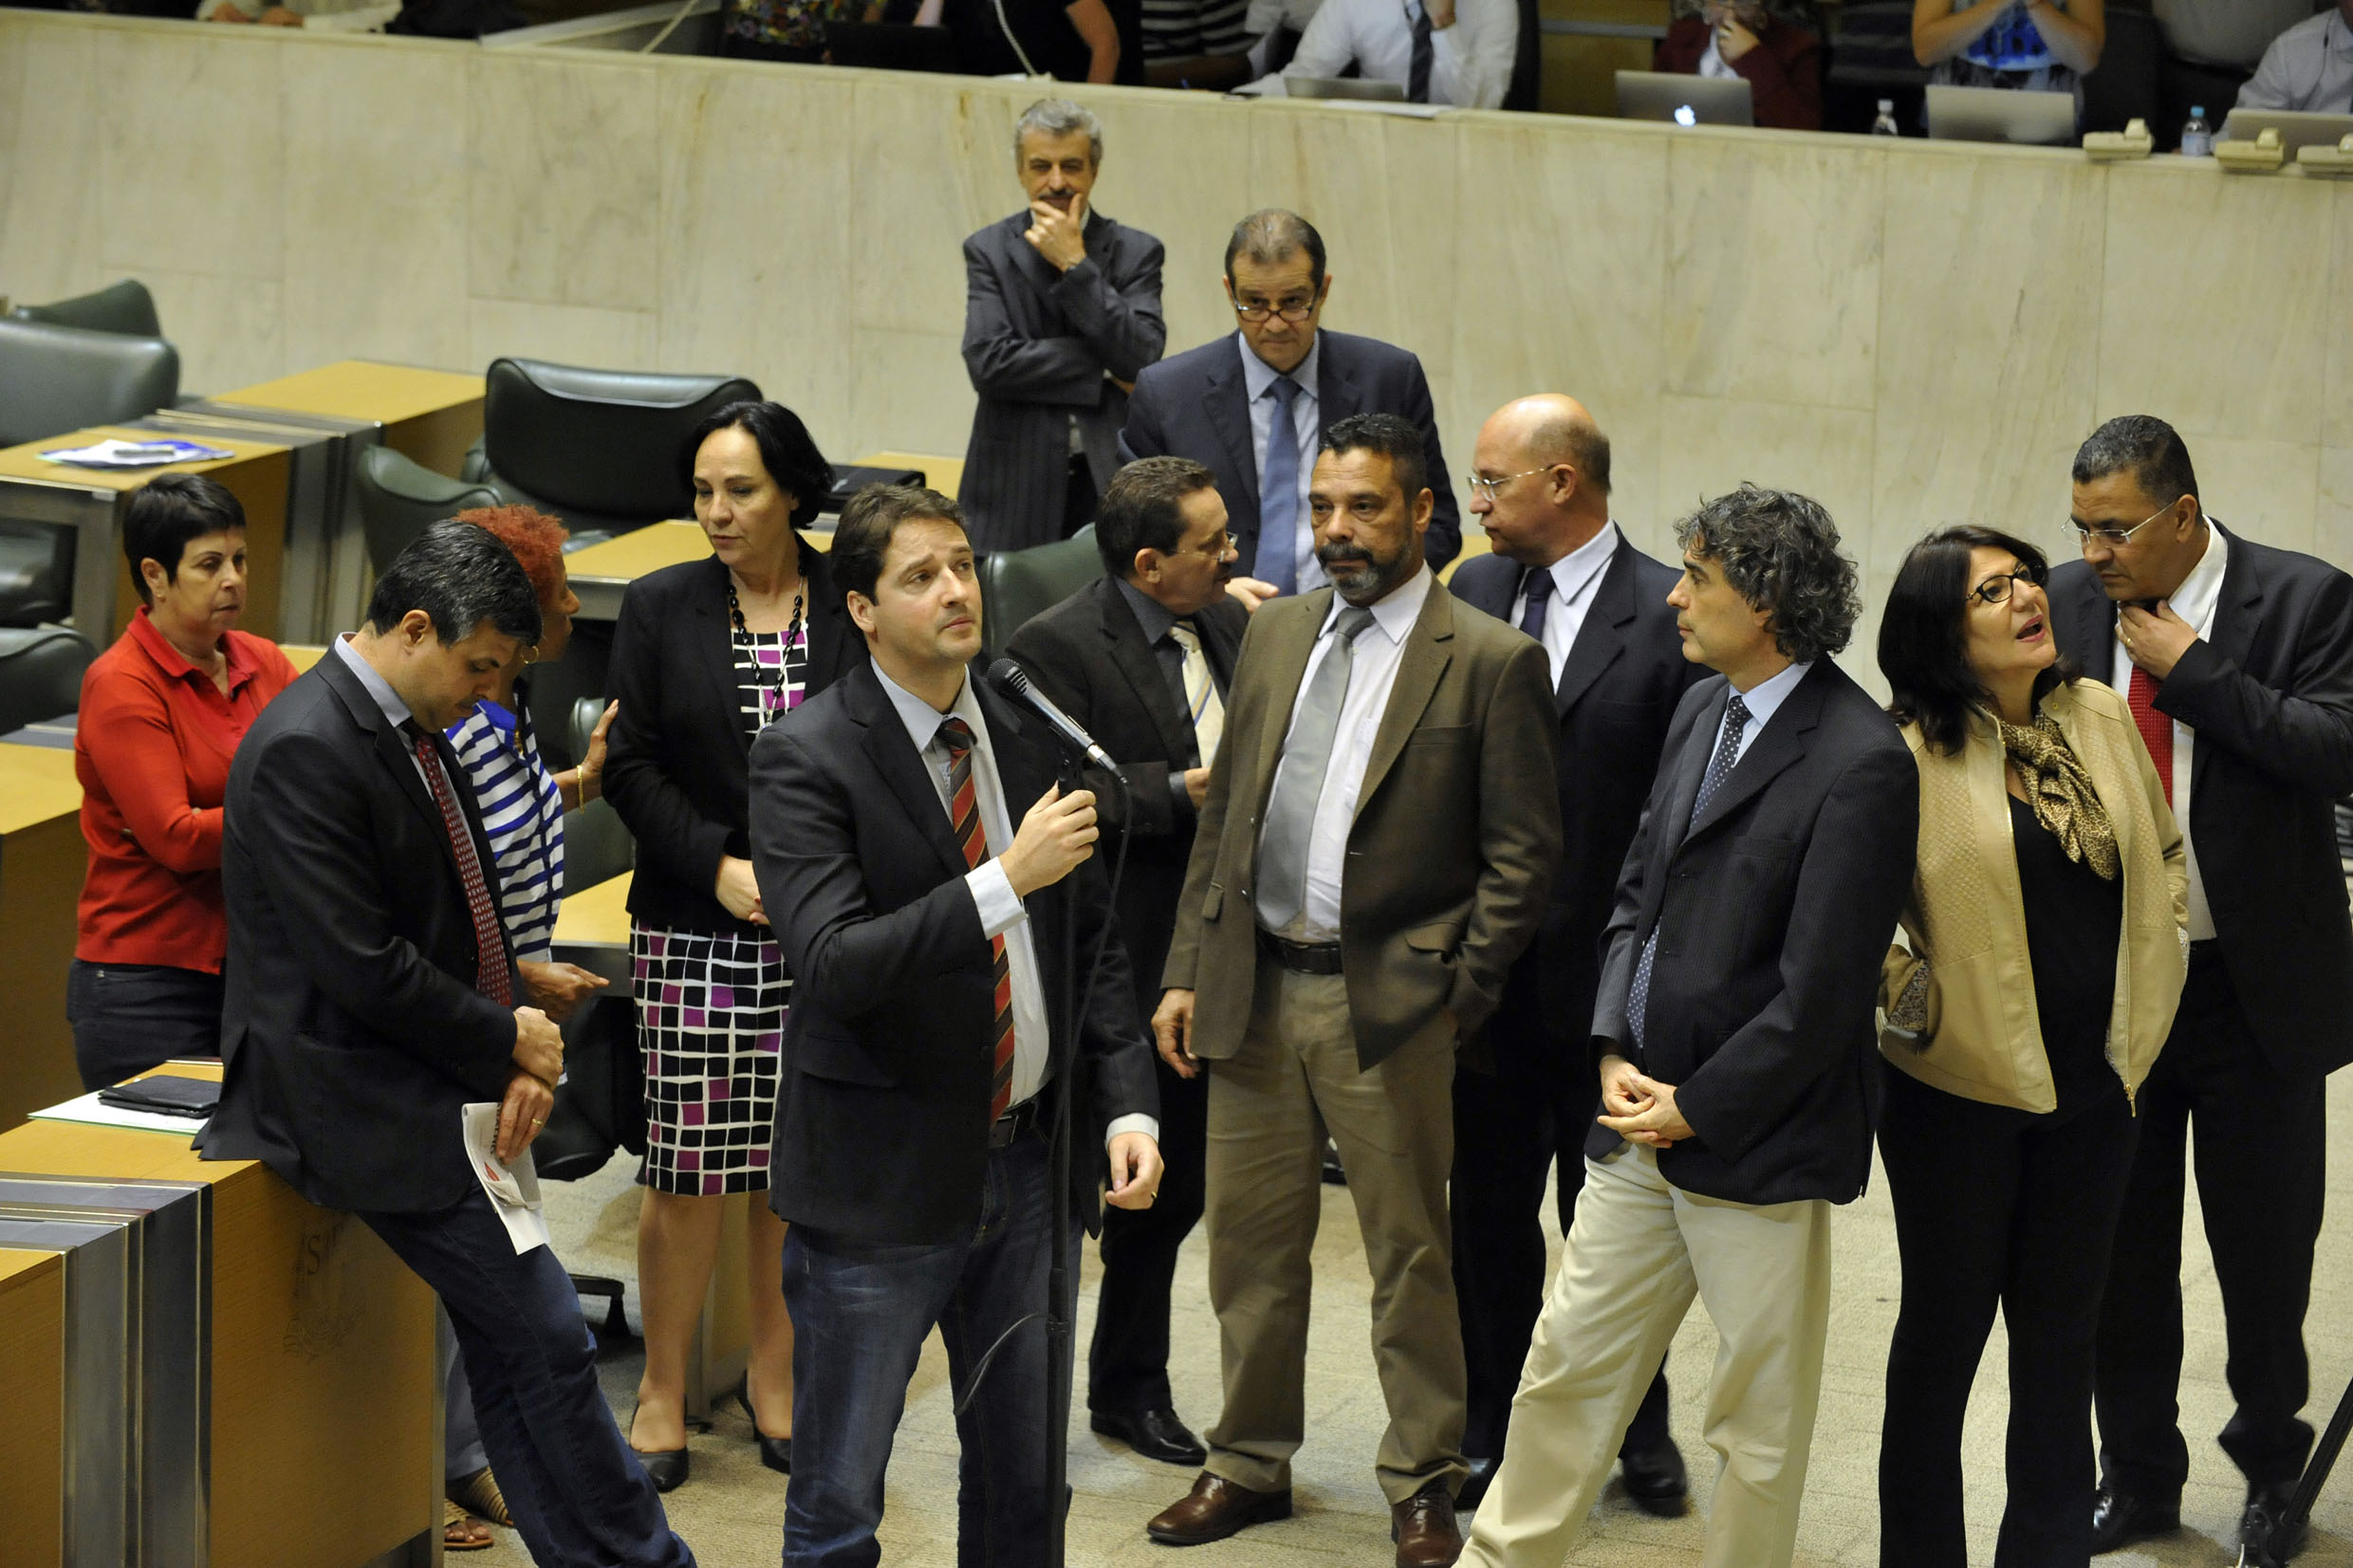 Raul Marcelo, ao microfone, e parlamentares <a style='float:right;color:#ccc' href='https://www3.al.sp.gov.br/repositorio/noticia/N-08-2015/fg173470.jpg' target=_blank><i class='bi bi-zoom-in'></i> Clique para ver a imagem </a>